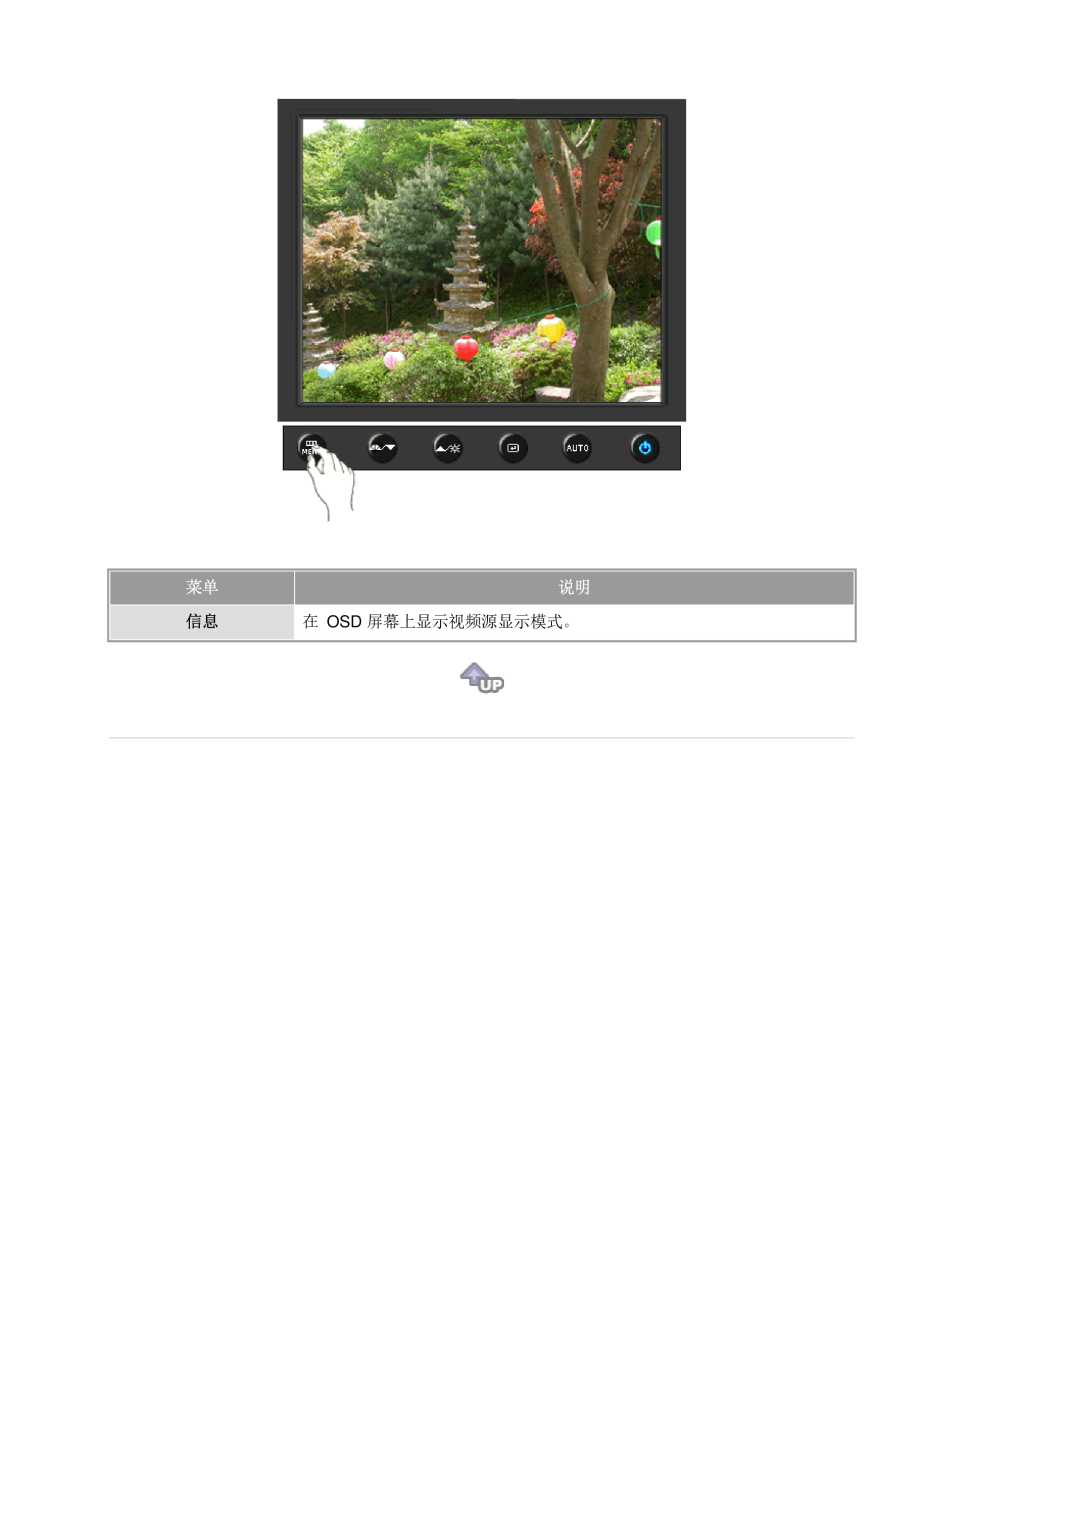 Samsung LS17HADKSH/EDC, LS19HADKSP/EDC, LS19HADKSE/EDC, LS17HADKSX/EDC manual 在 Osd 屏幕上显示视频源显示模式。, 菜单说明 